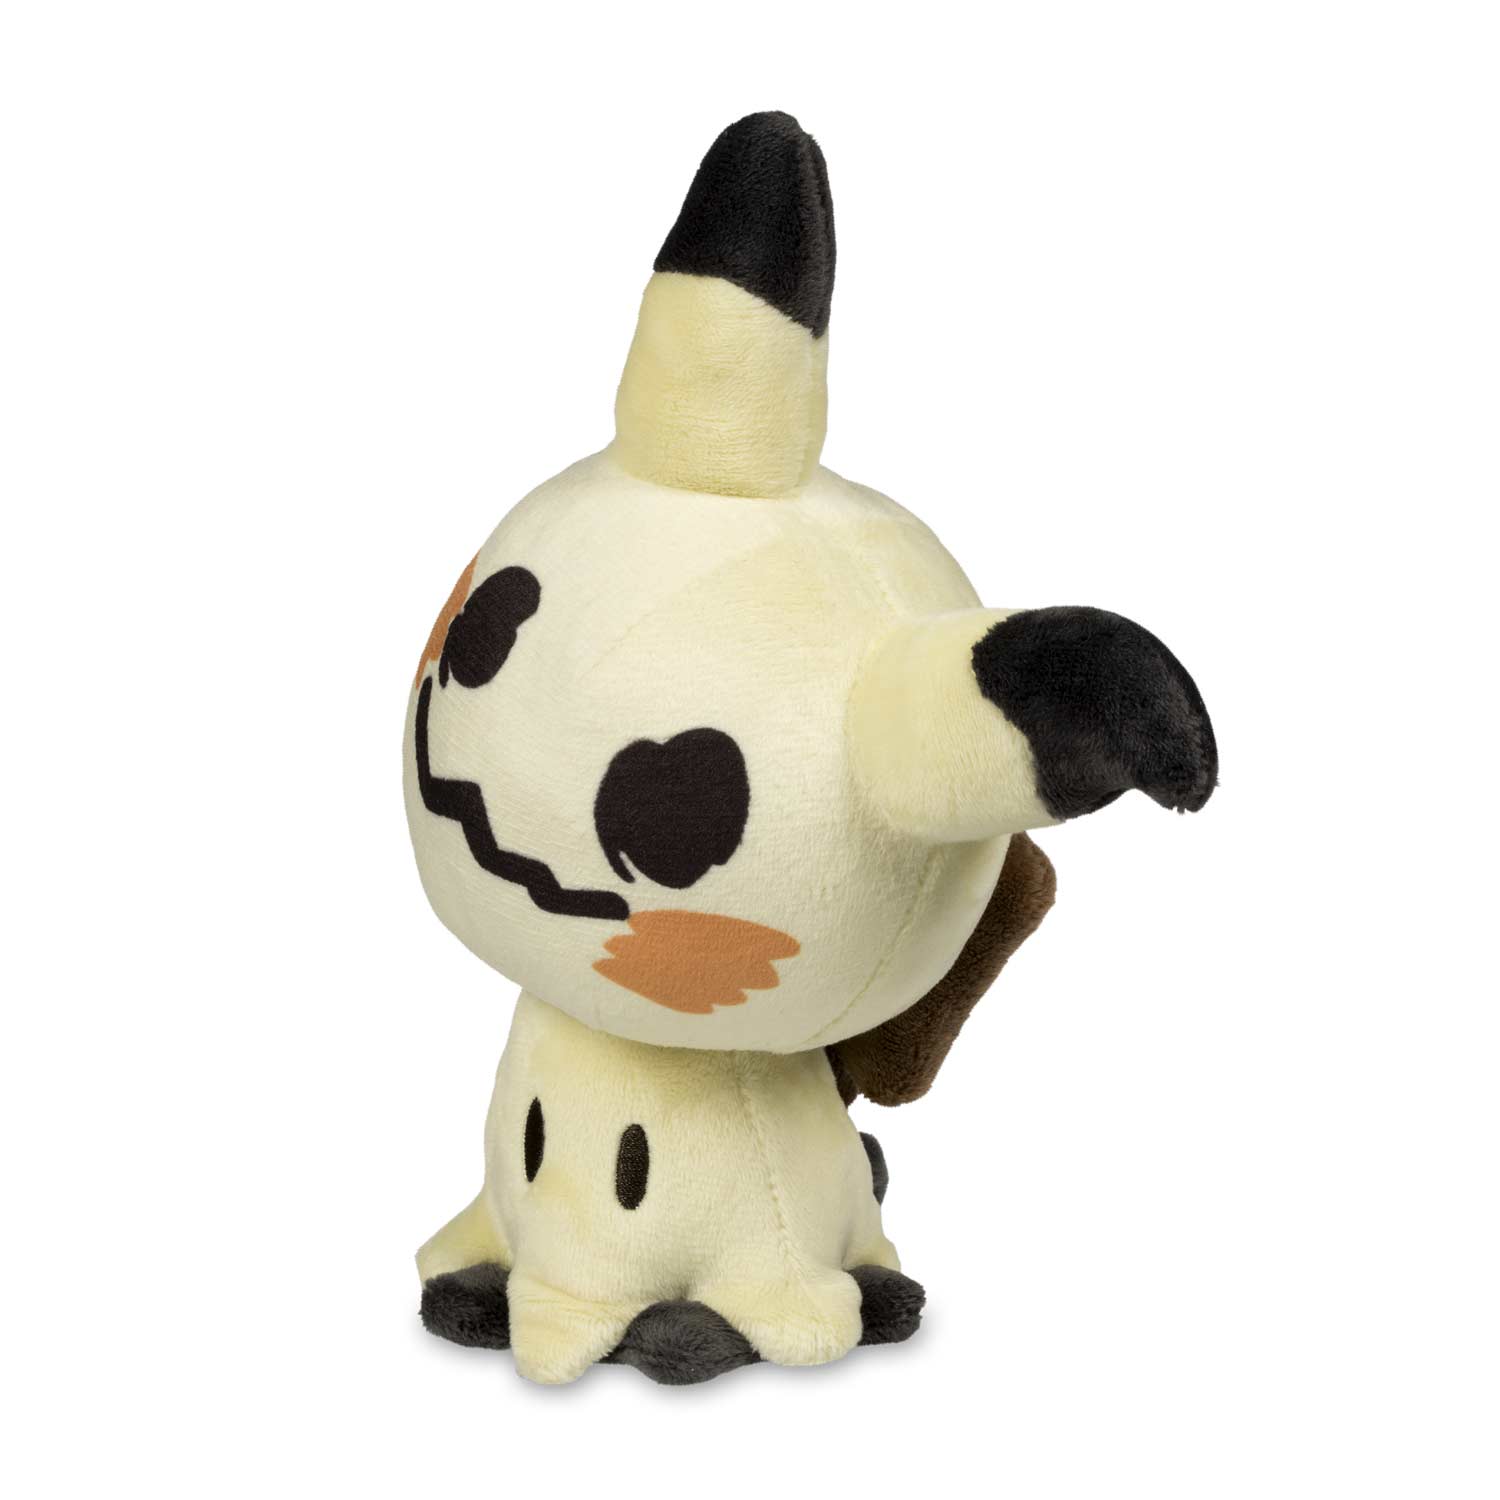 13cm Mimikyu Pokemon Center Go Plush Toy Stuffed Doll